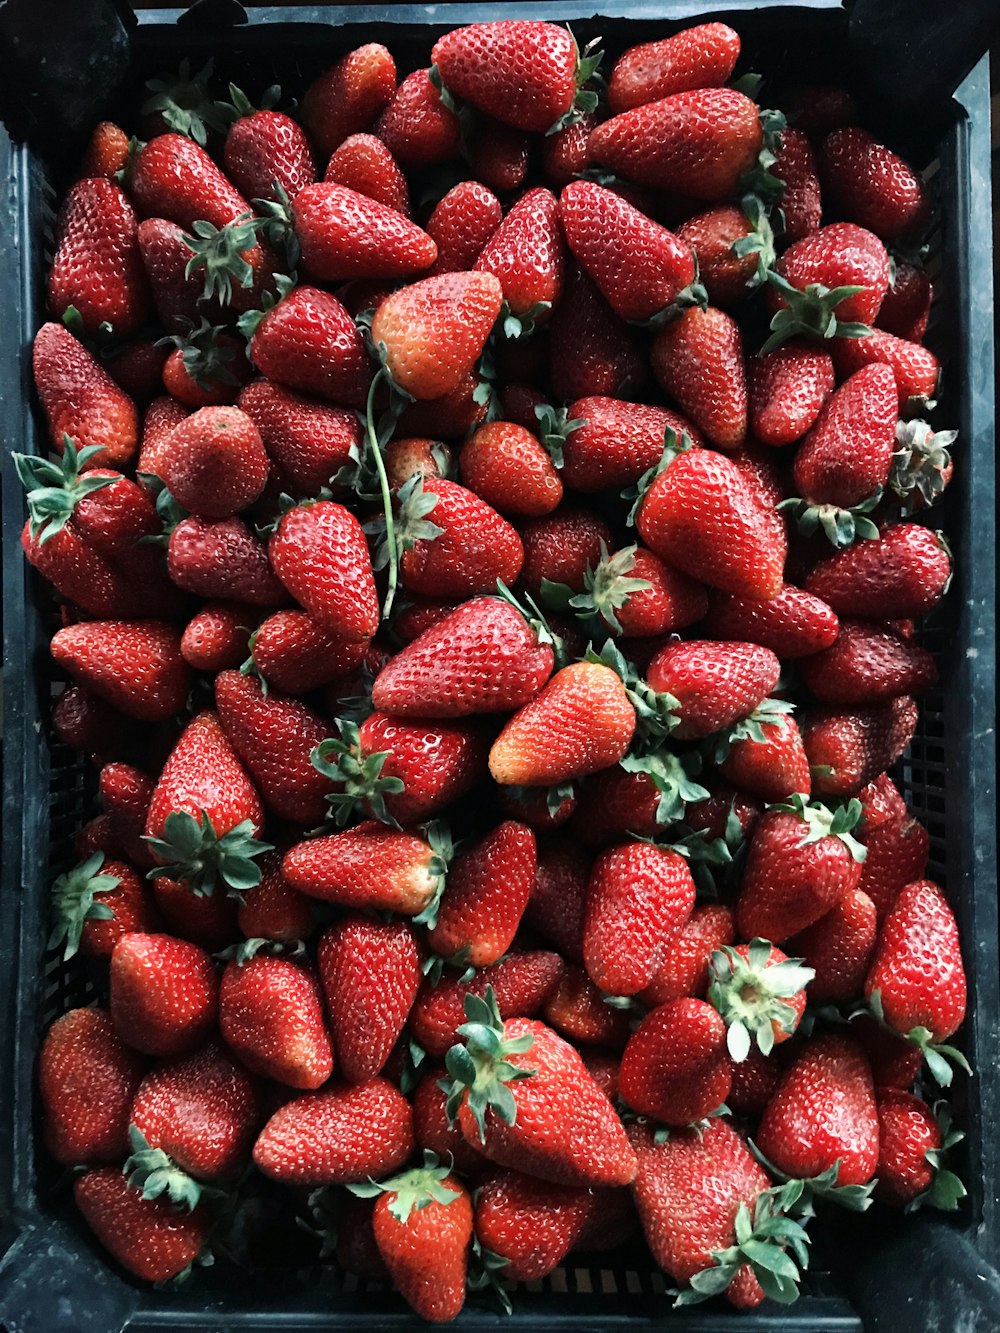 strawberry lot on black plastic crate